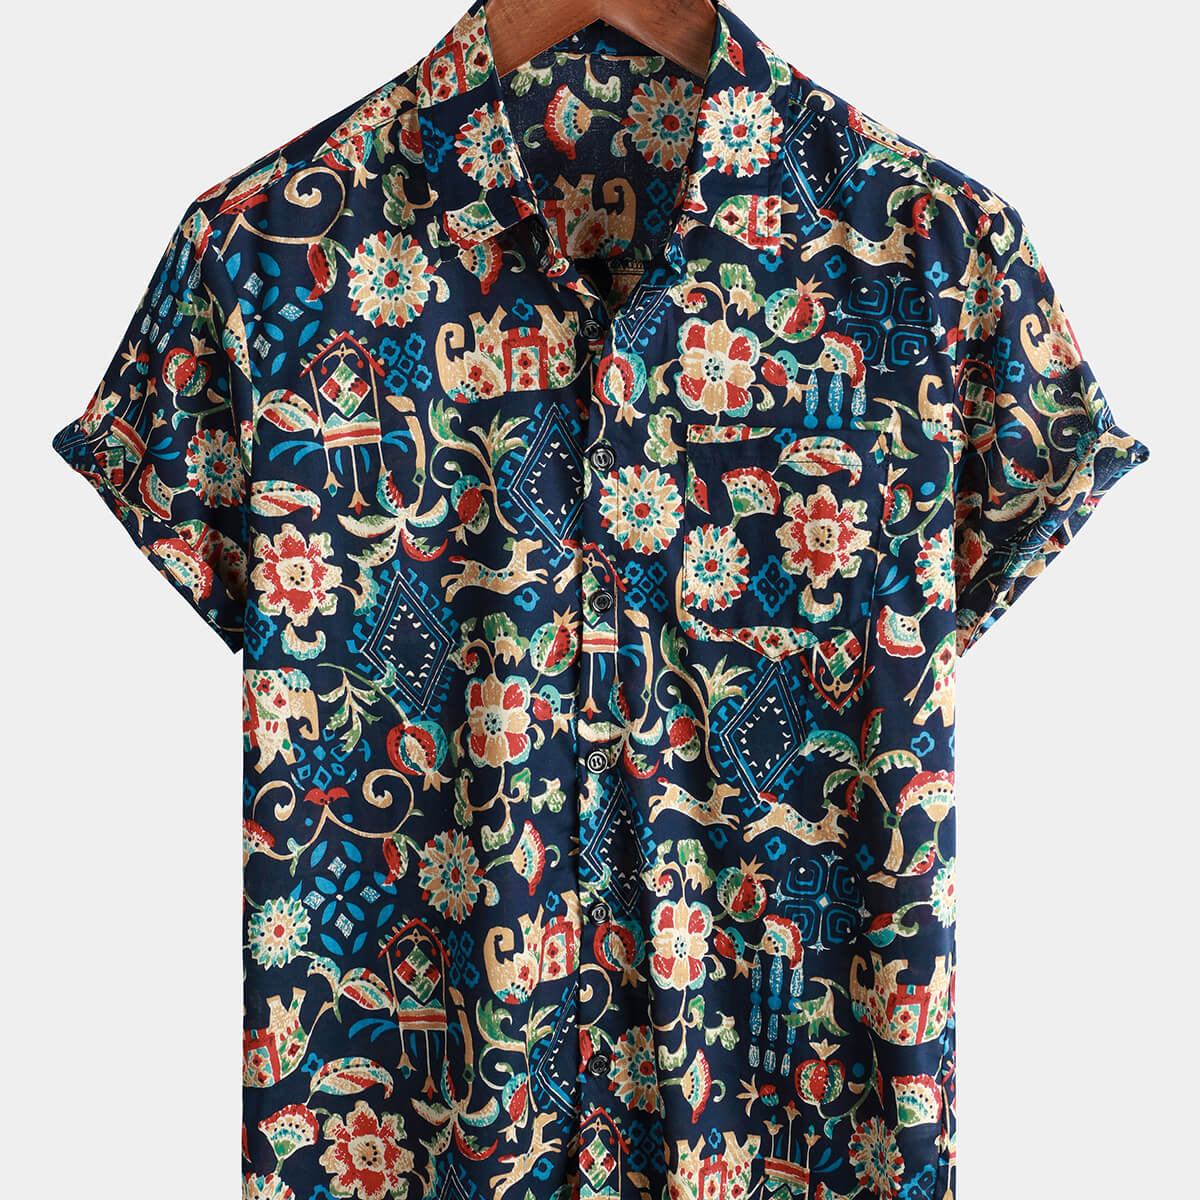 Men's Vintage Beach Hawaiian Cotton Holiday Button Up Navy Blue Short Sleeve Floral Shirt